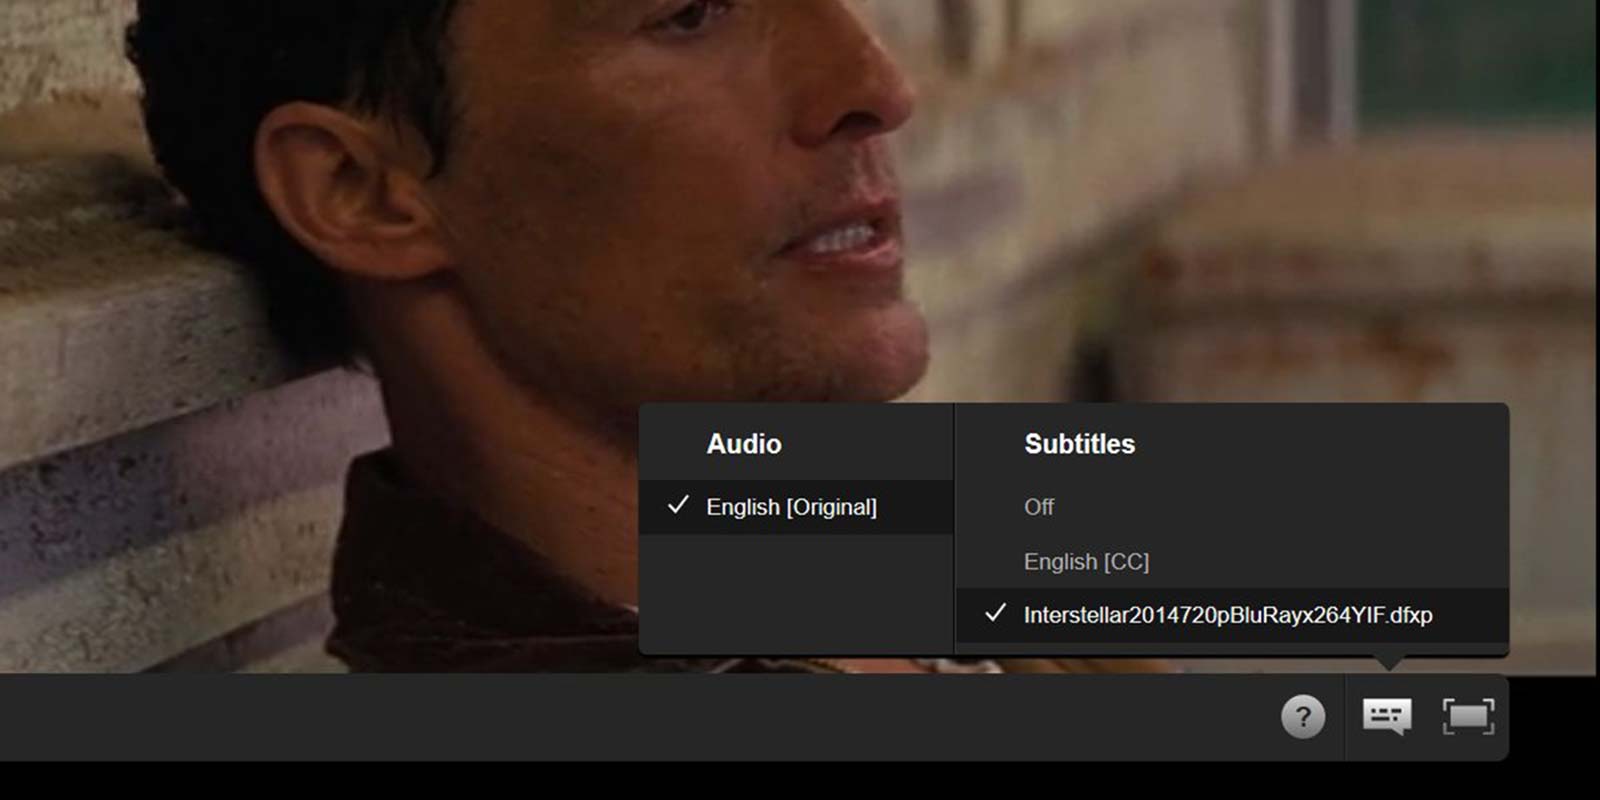 English subtitles. Netflix субтитры. #Субтитры #Subtitles. Английские субтитры. Субтитры на экране.